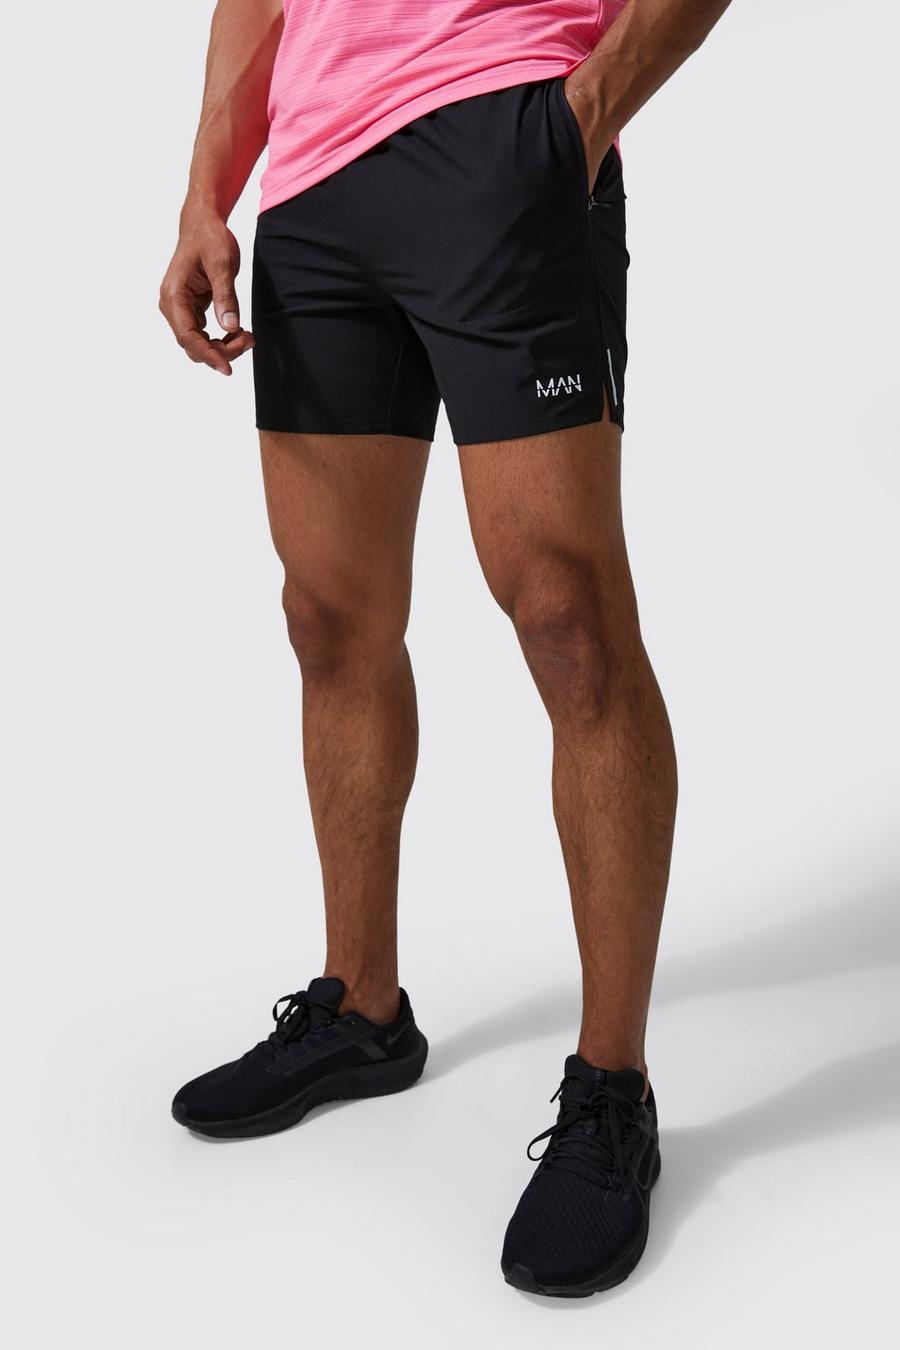 Man Active Lightweight Performance Shorts, Black image number 1